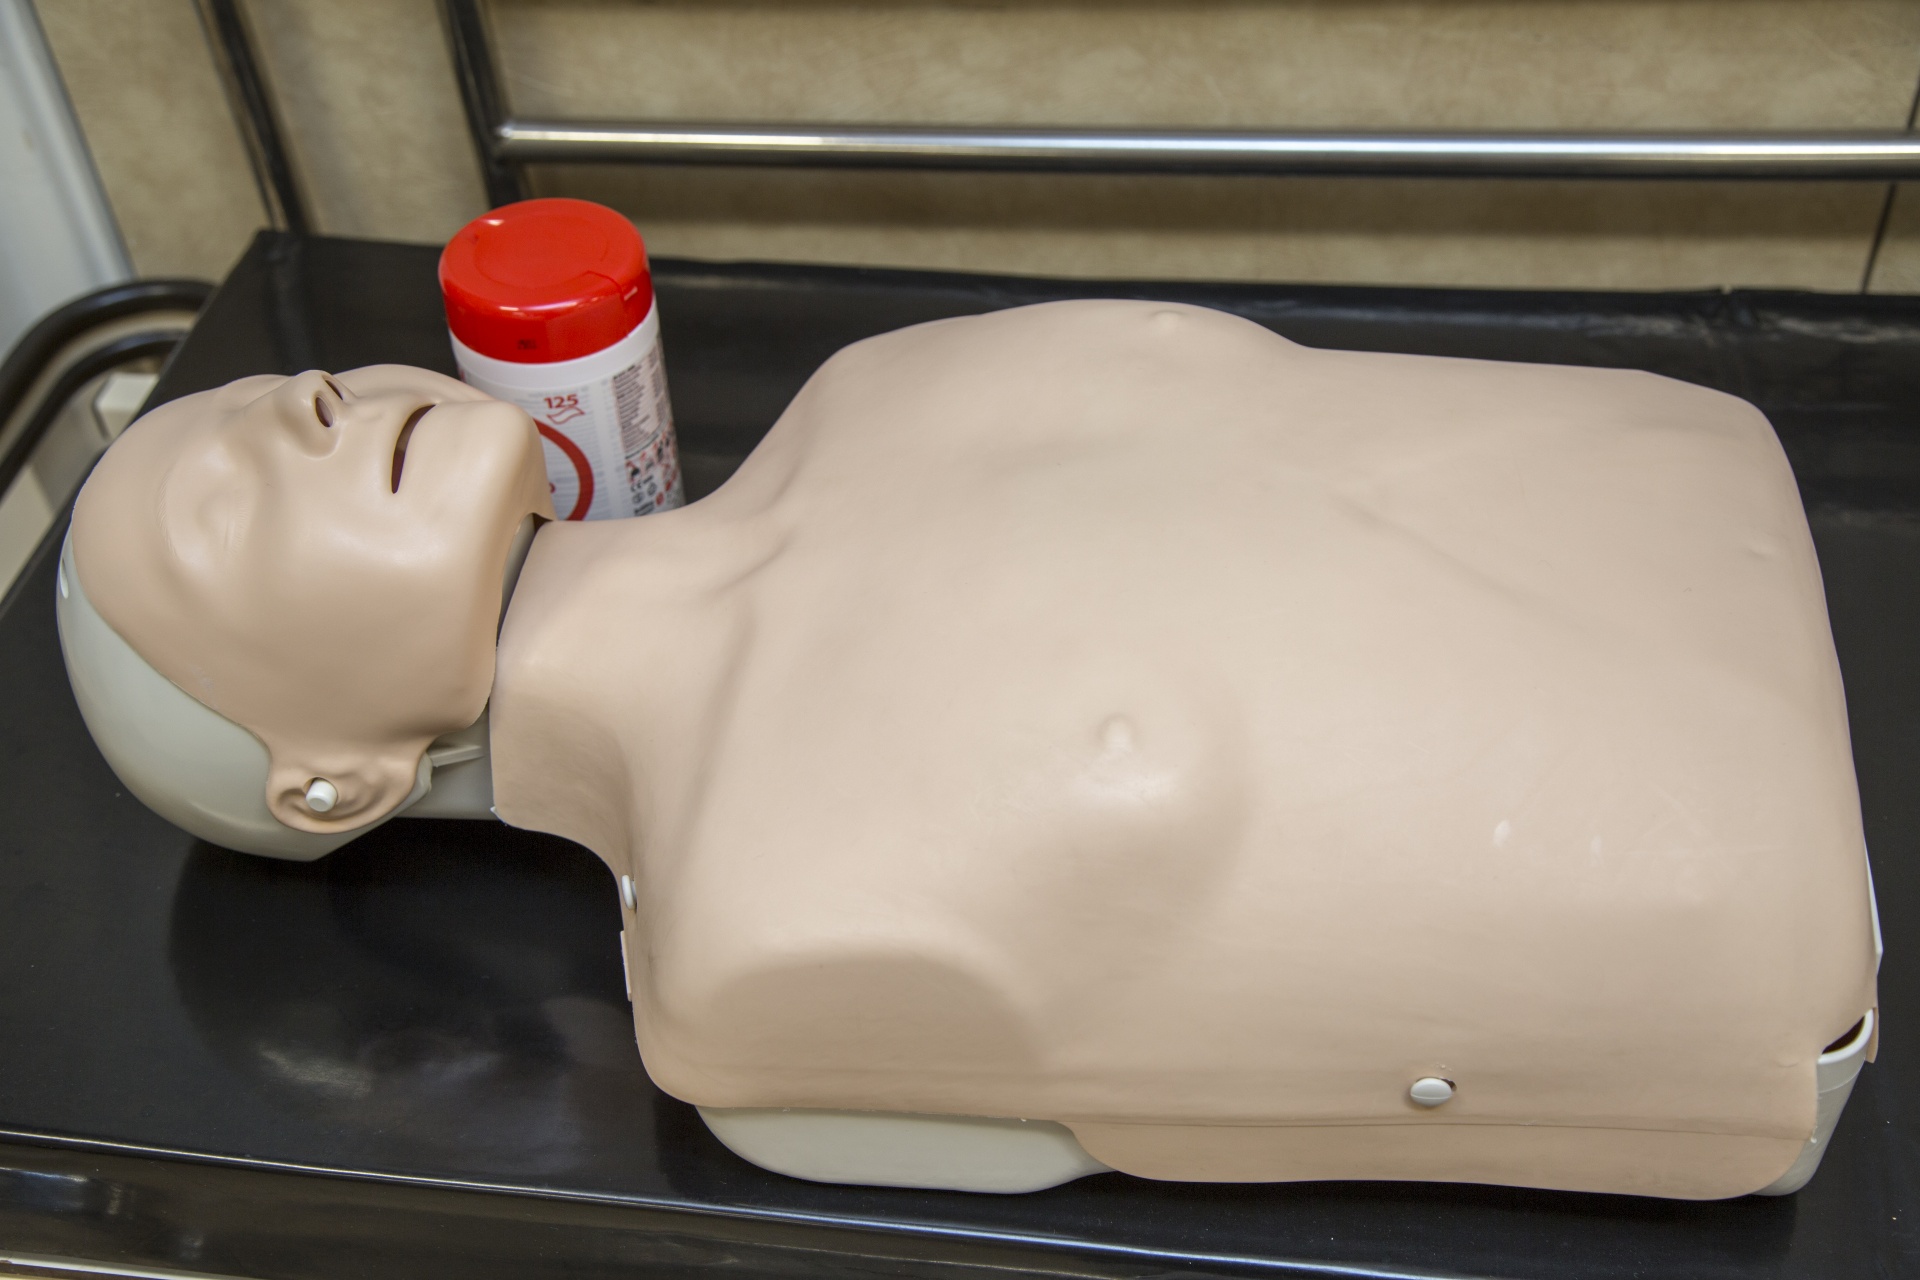 CPR Defibrillator